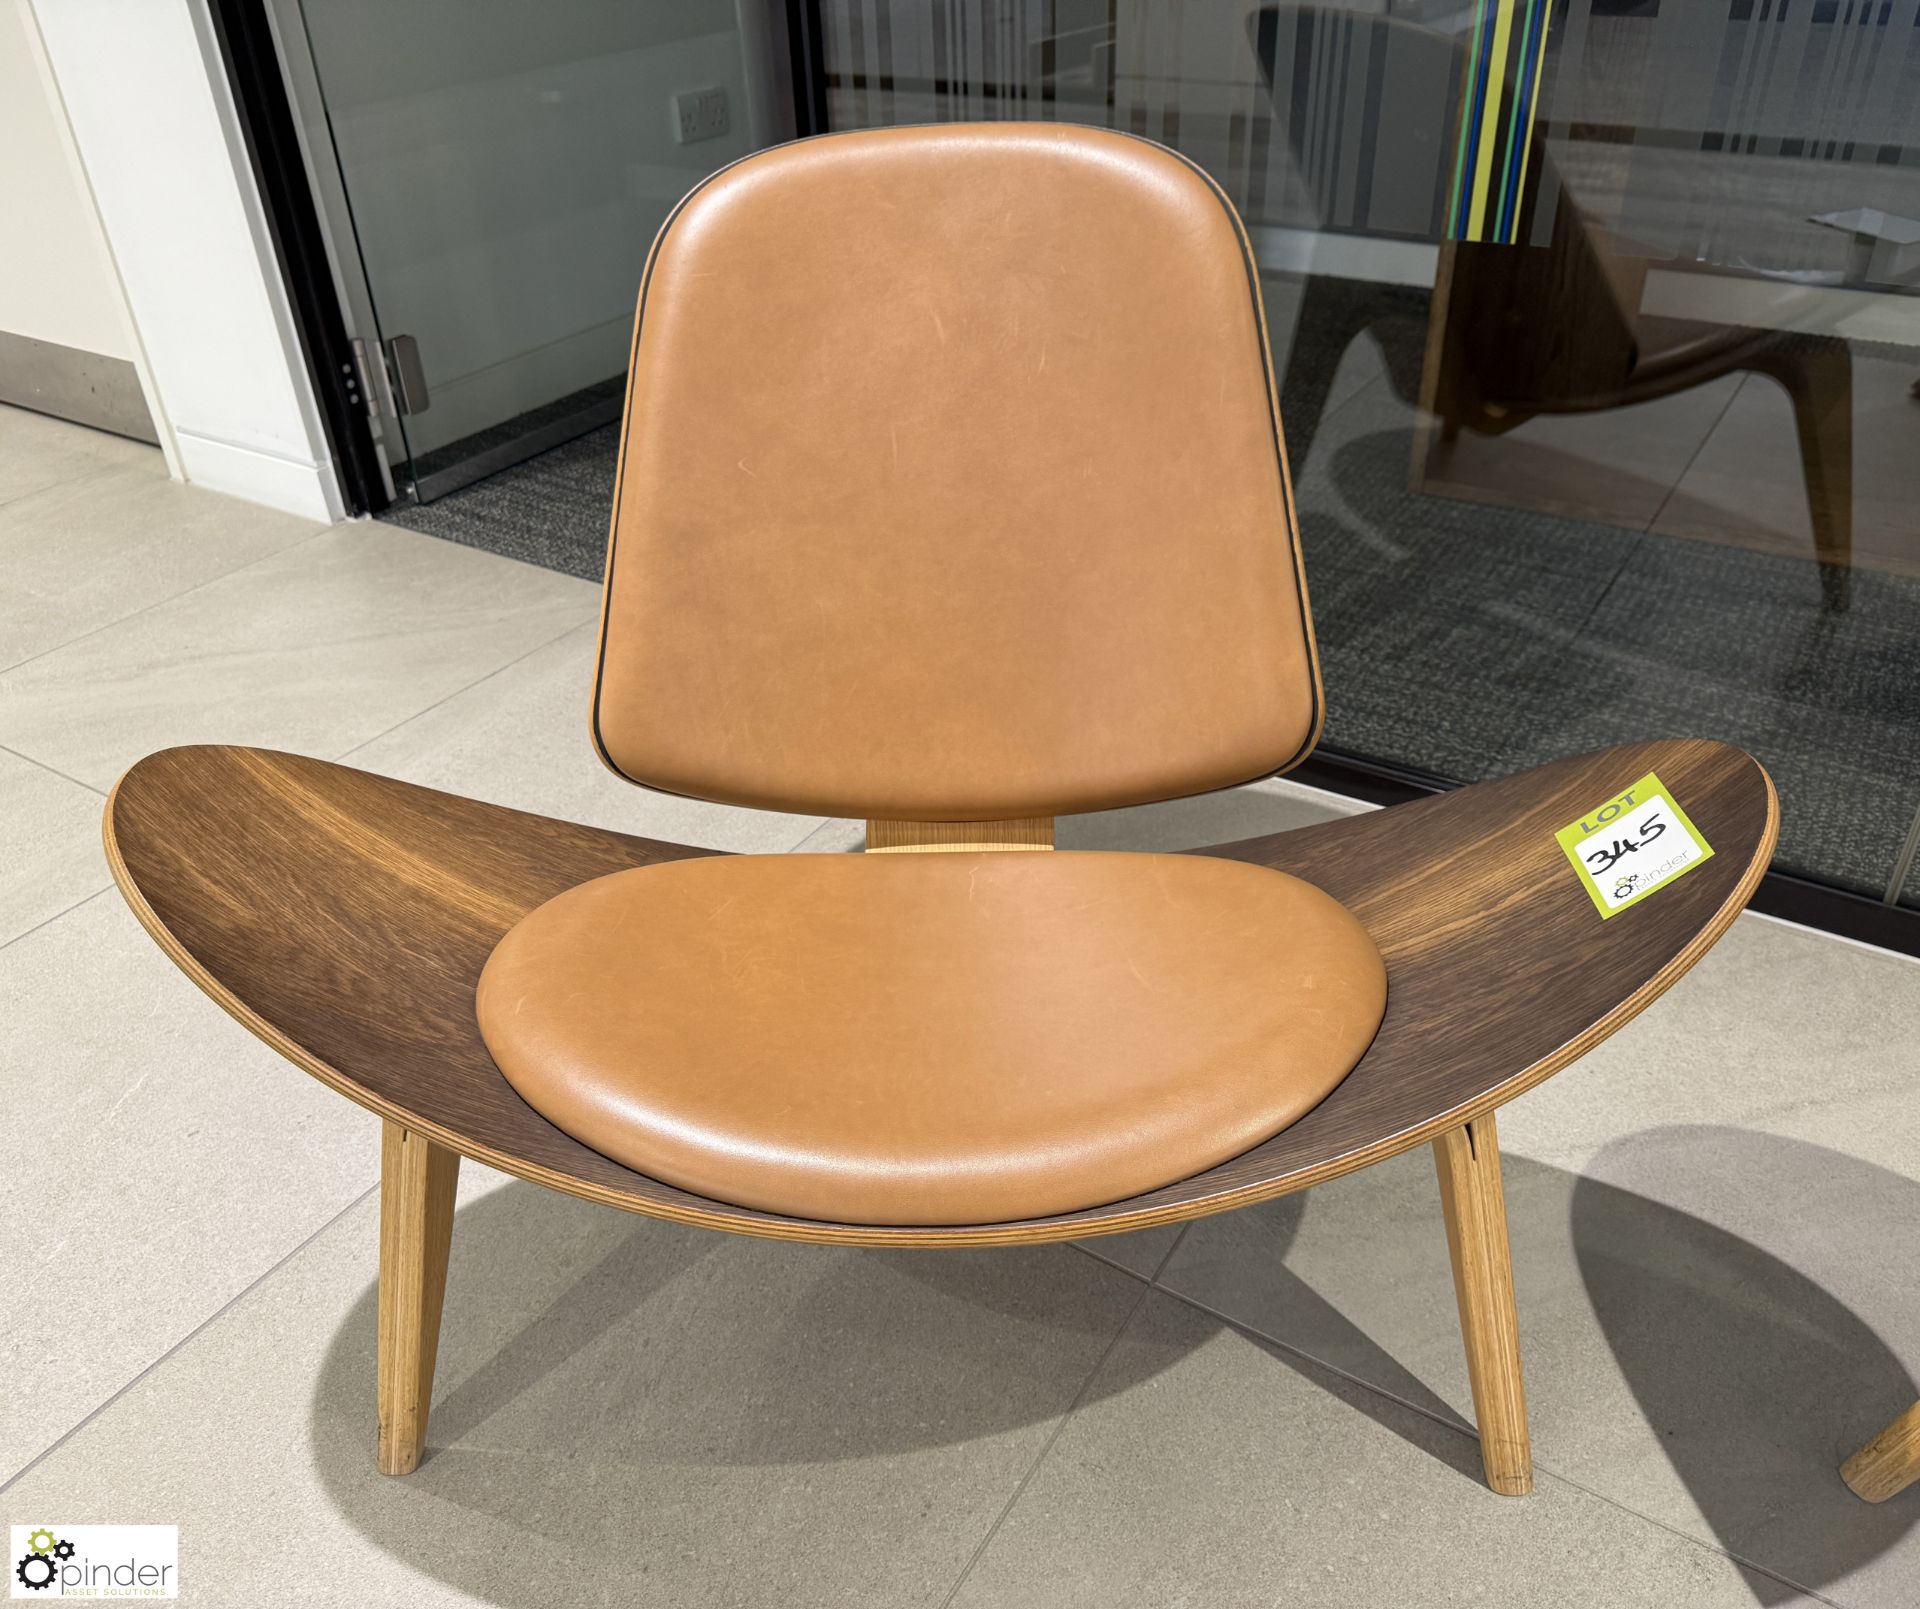 Carl Hansen & Son Shell Chair, “The Smiling Chair”, designed by Hans J Wegner, serial number